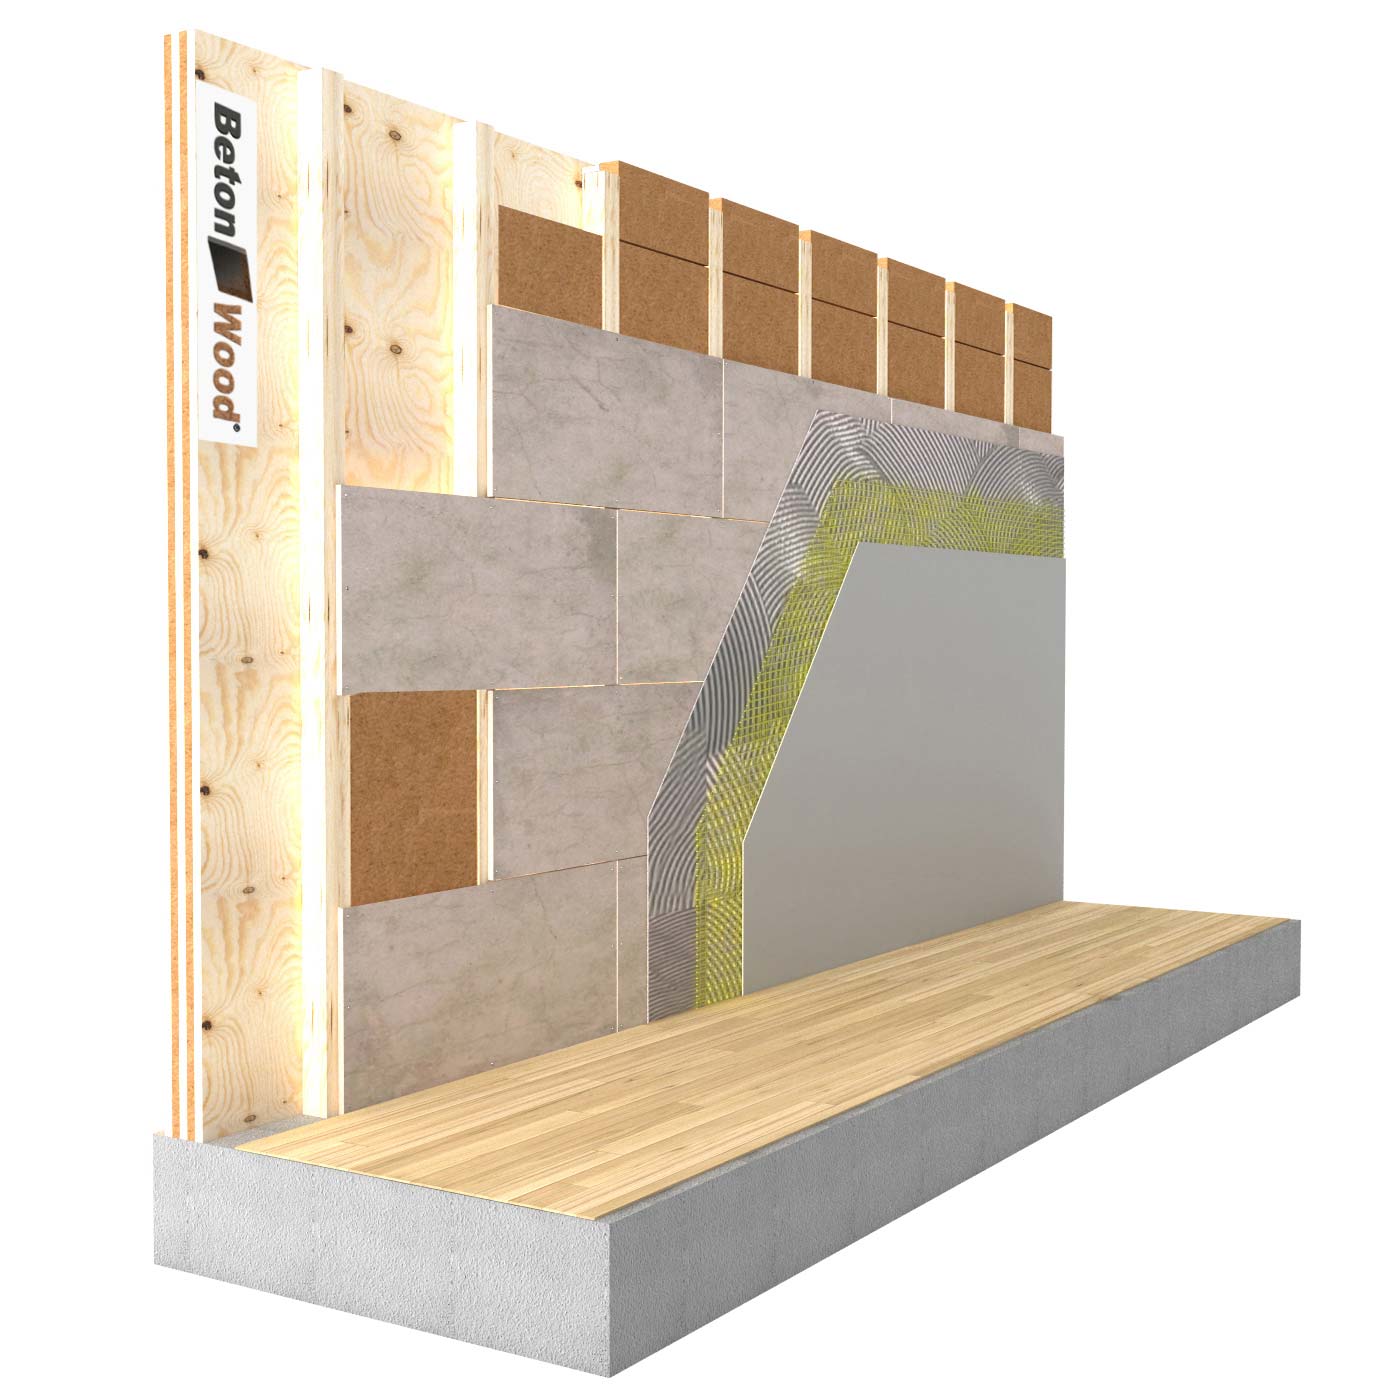 Counterwall insulation in flexible fiber wood Flex on wood